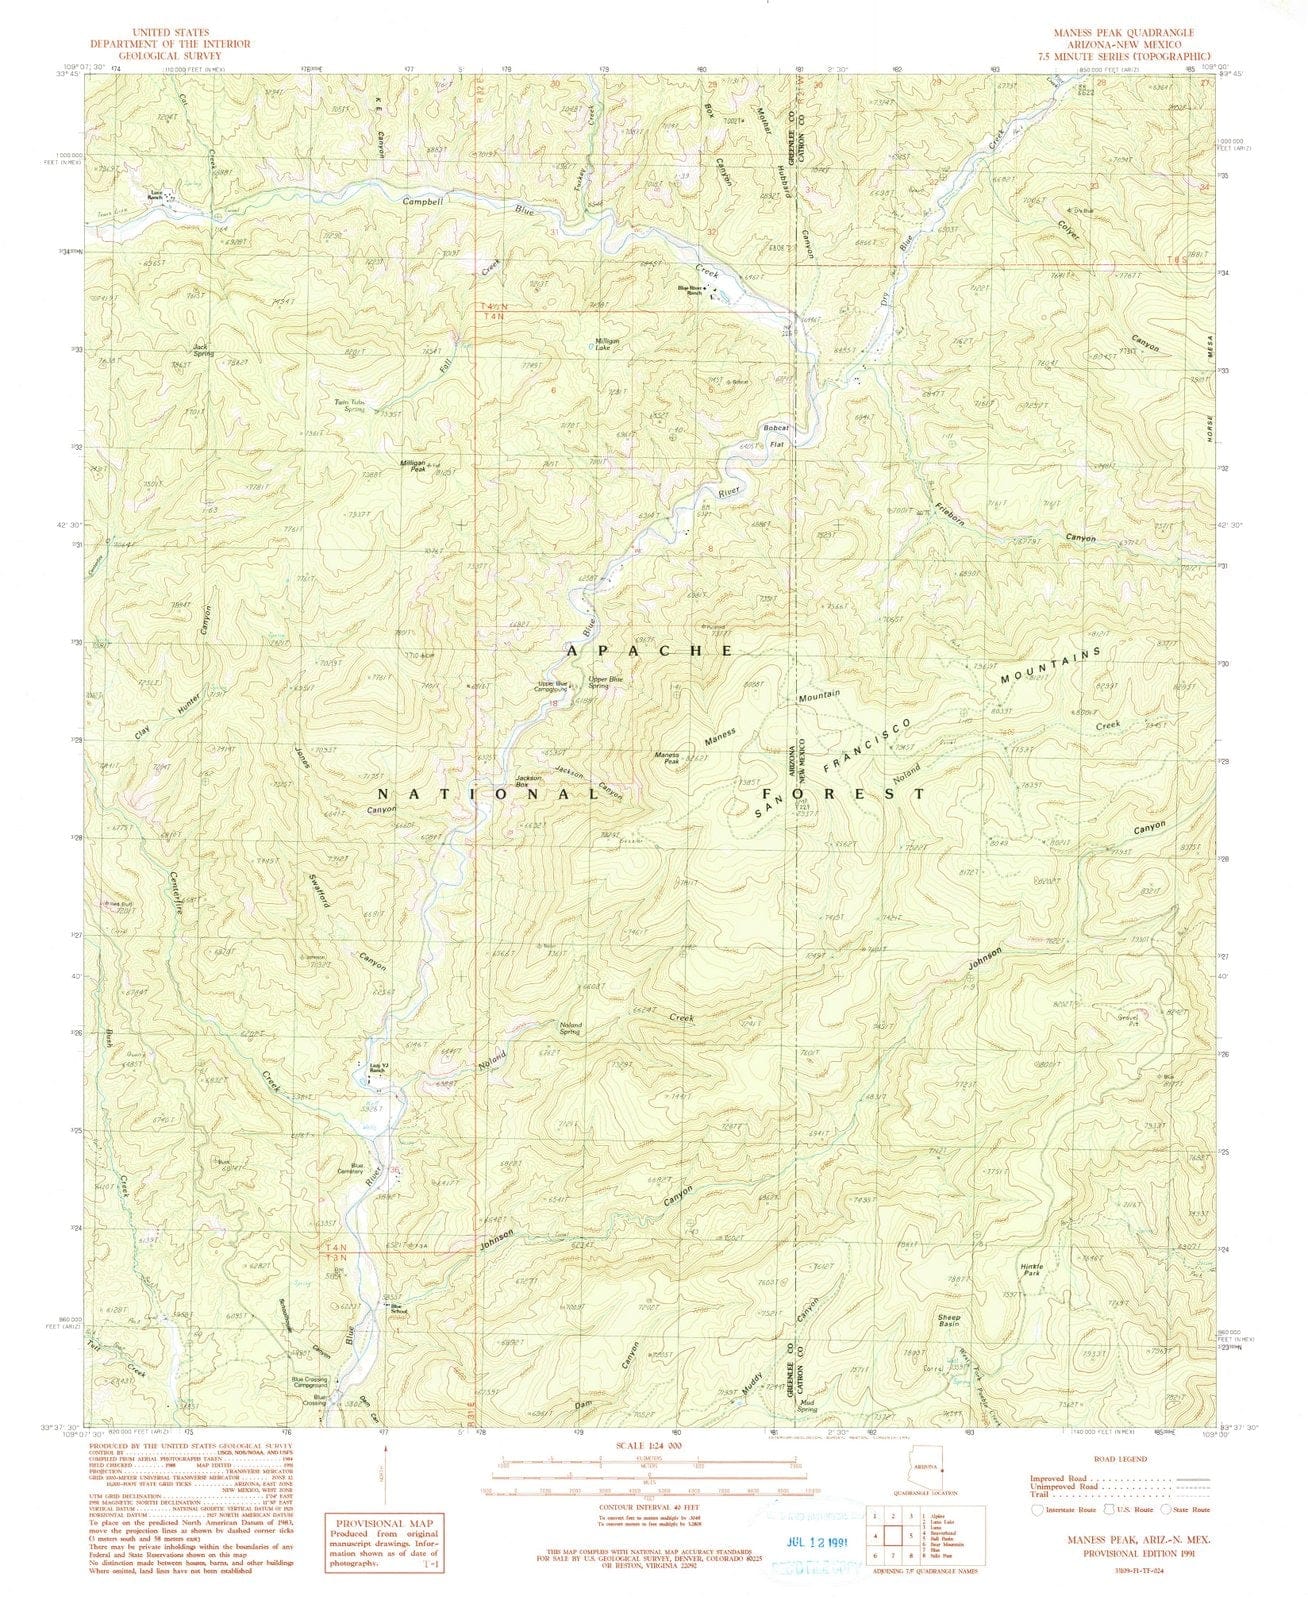 1991 Maness Peak, AZ - Arizona - USGS Topographic Map